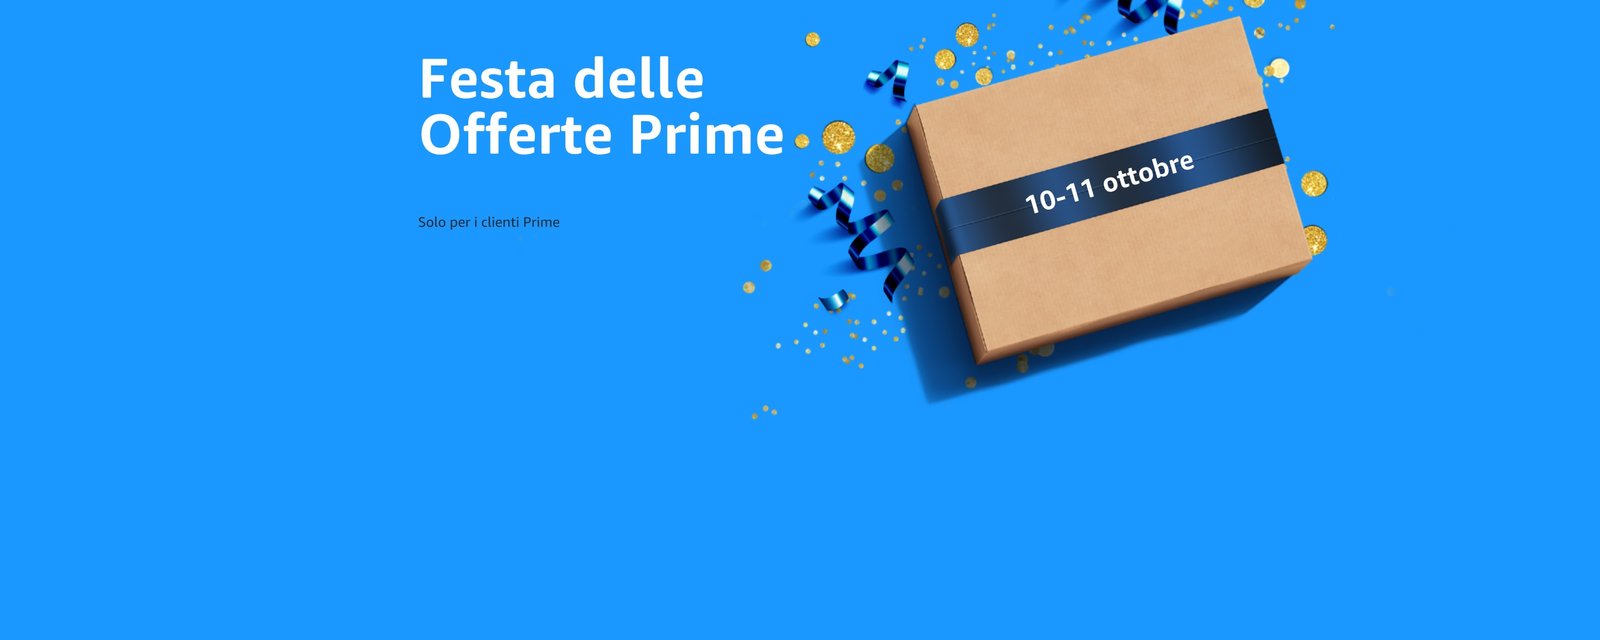 Offerte Amazon Prime 10-11 ottobre